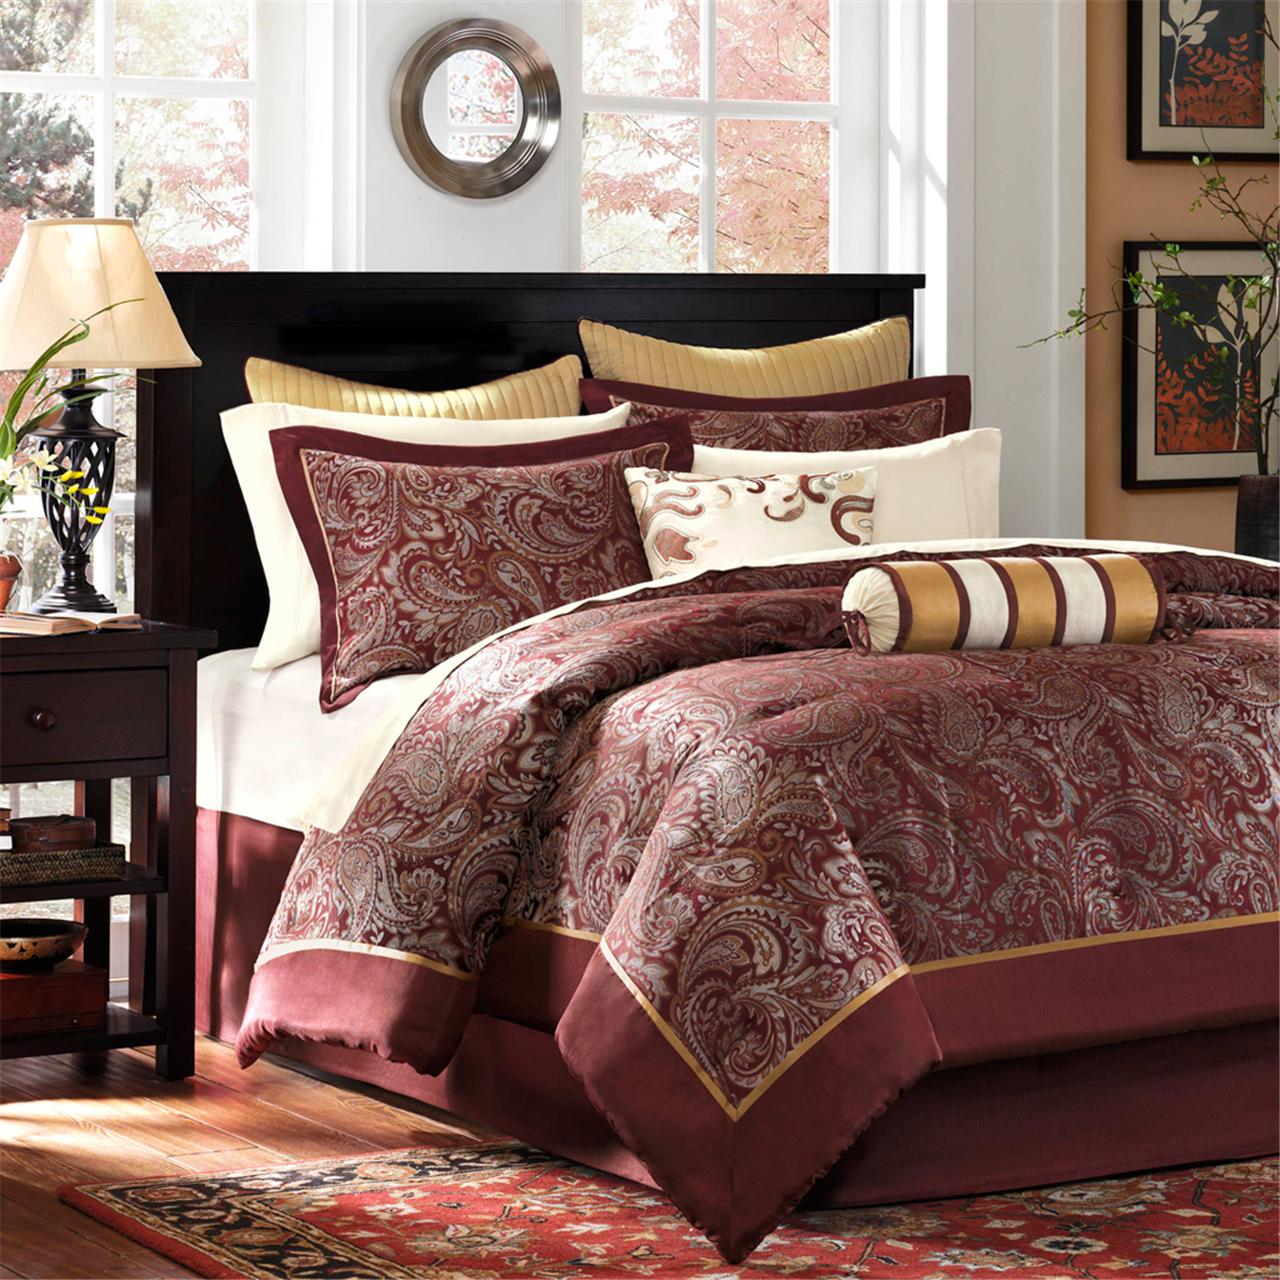 Luxurious Floral Pattern Aubery Duvet Cover Sets Quilt Cover Sets Bedding Sets 